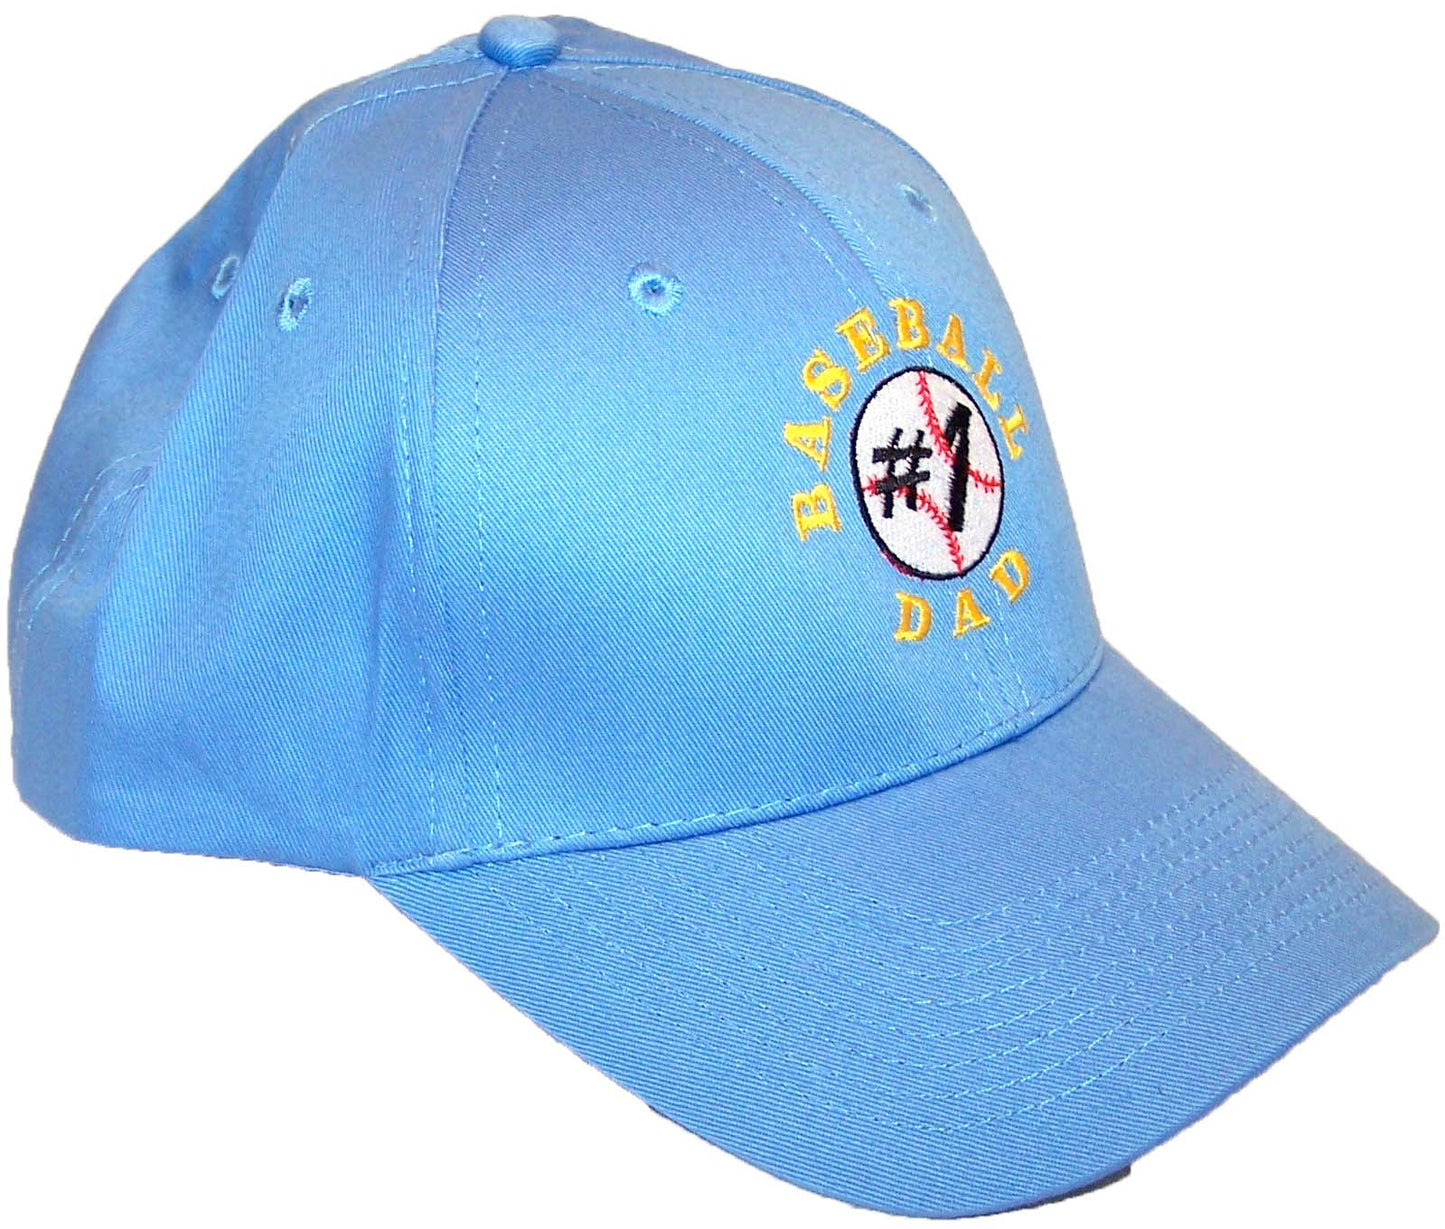 #1 Baseball Dad Baseball Hat